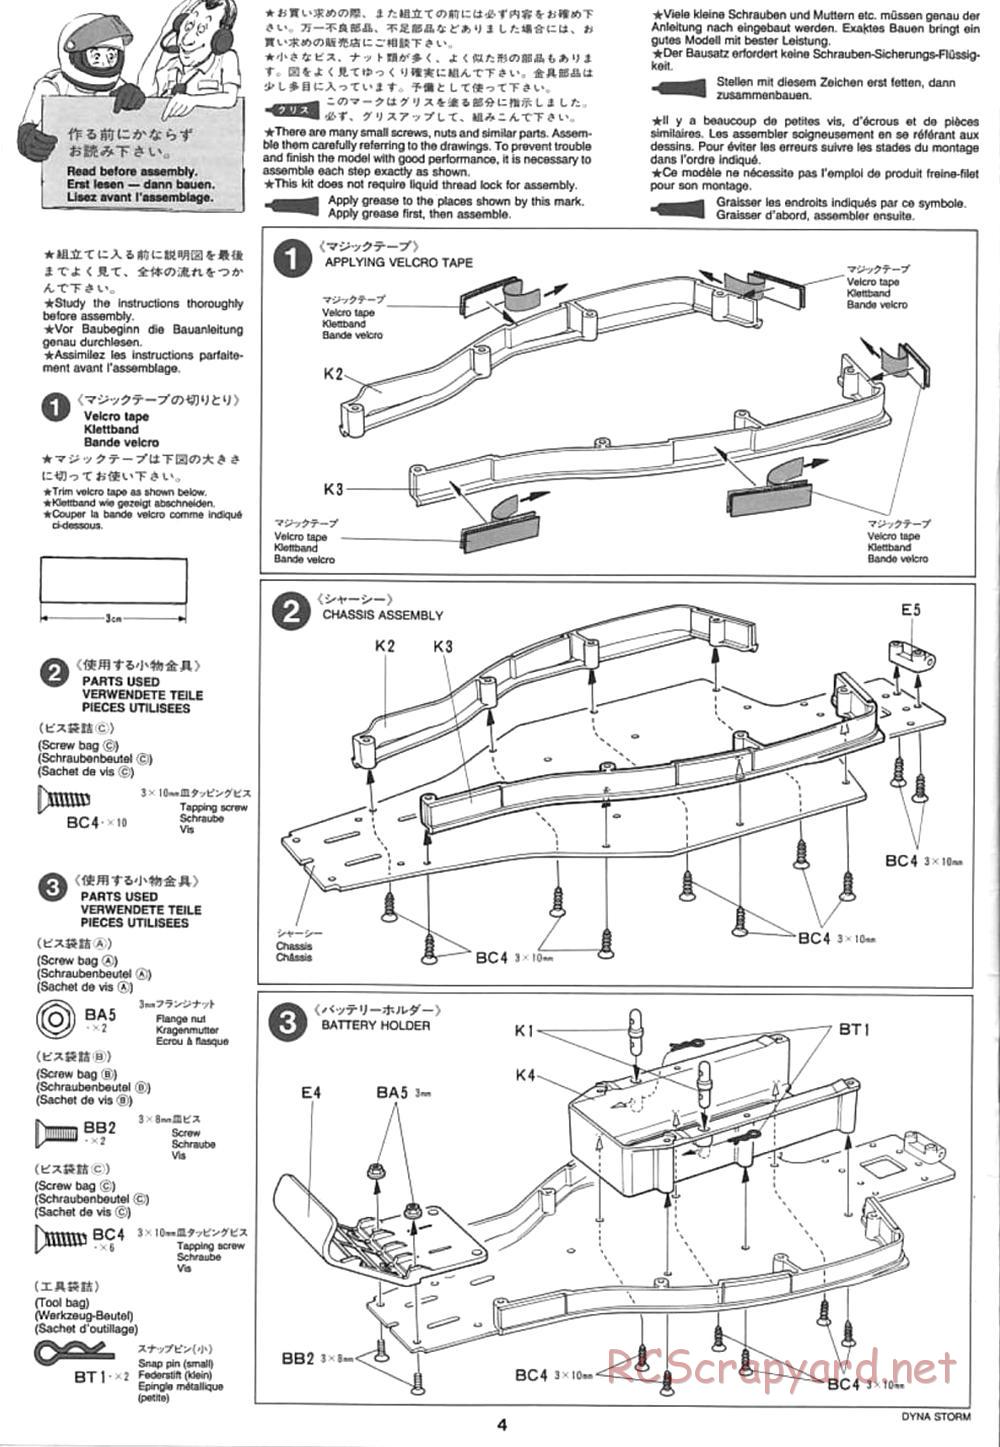 Tamiya - Dyna Storm Chassis - Manual - Page 4